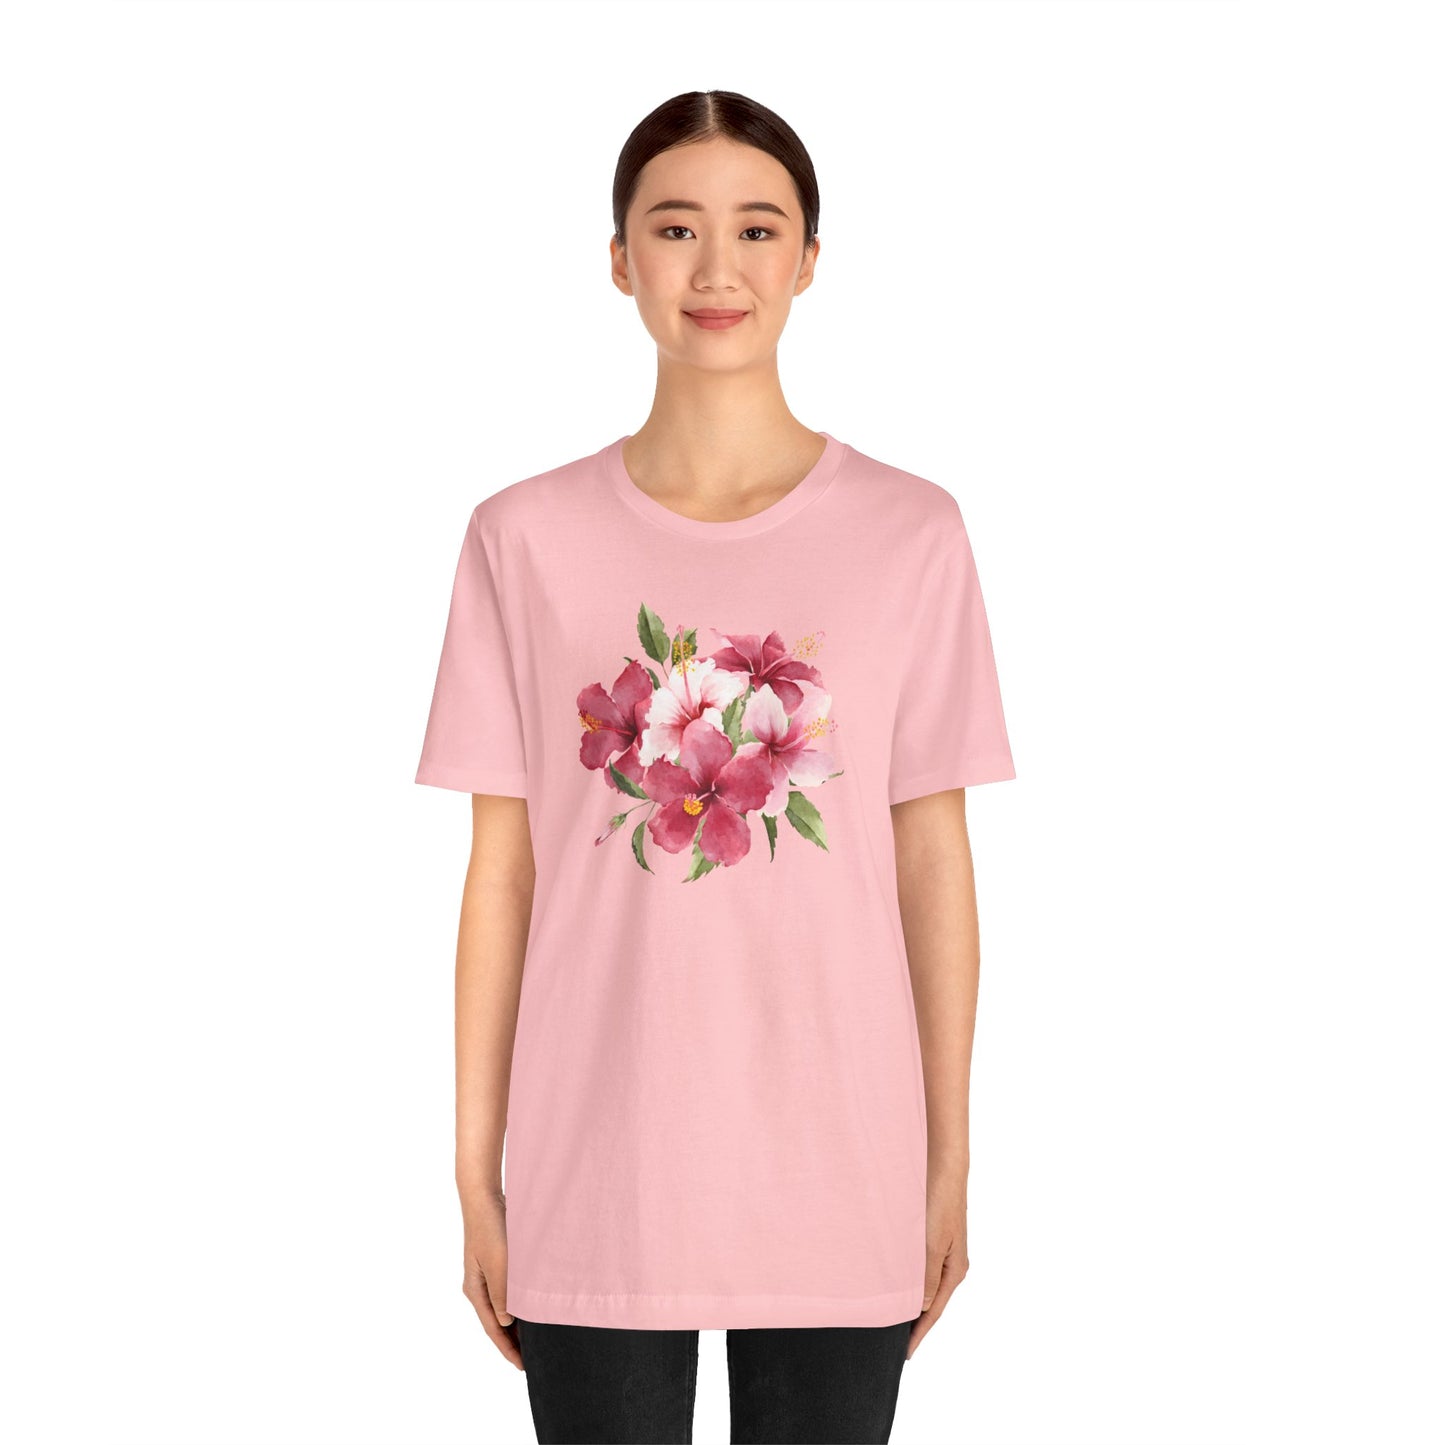 Petite woman wearing the pink t-shirt